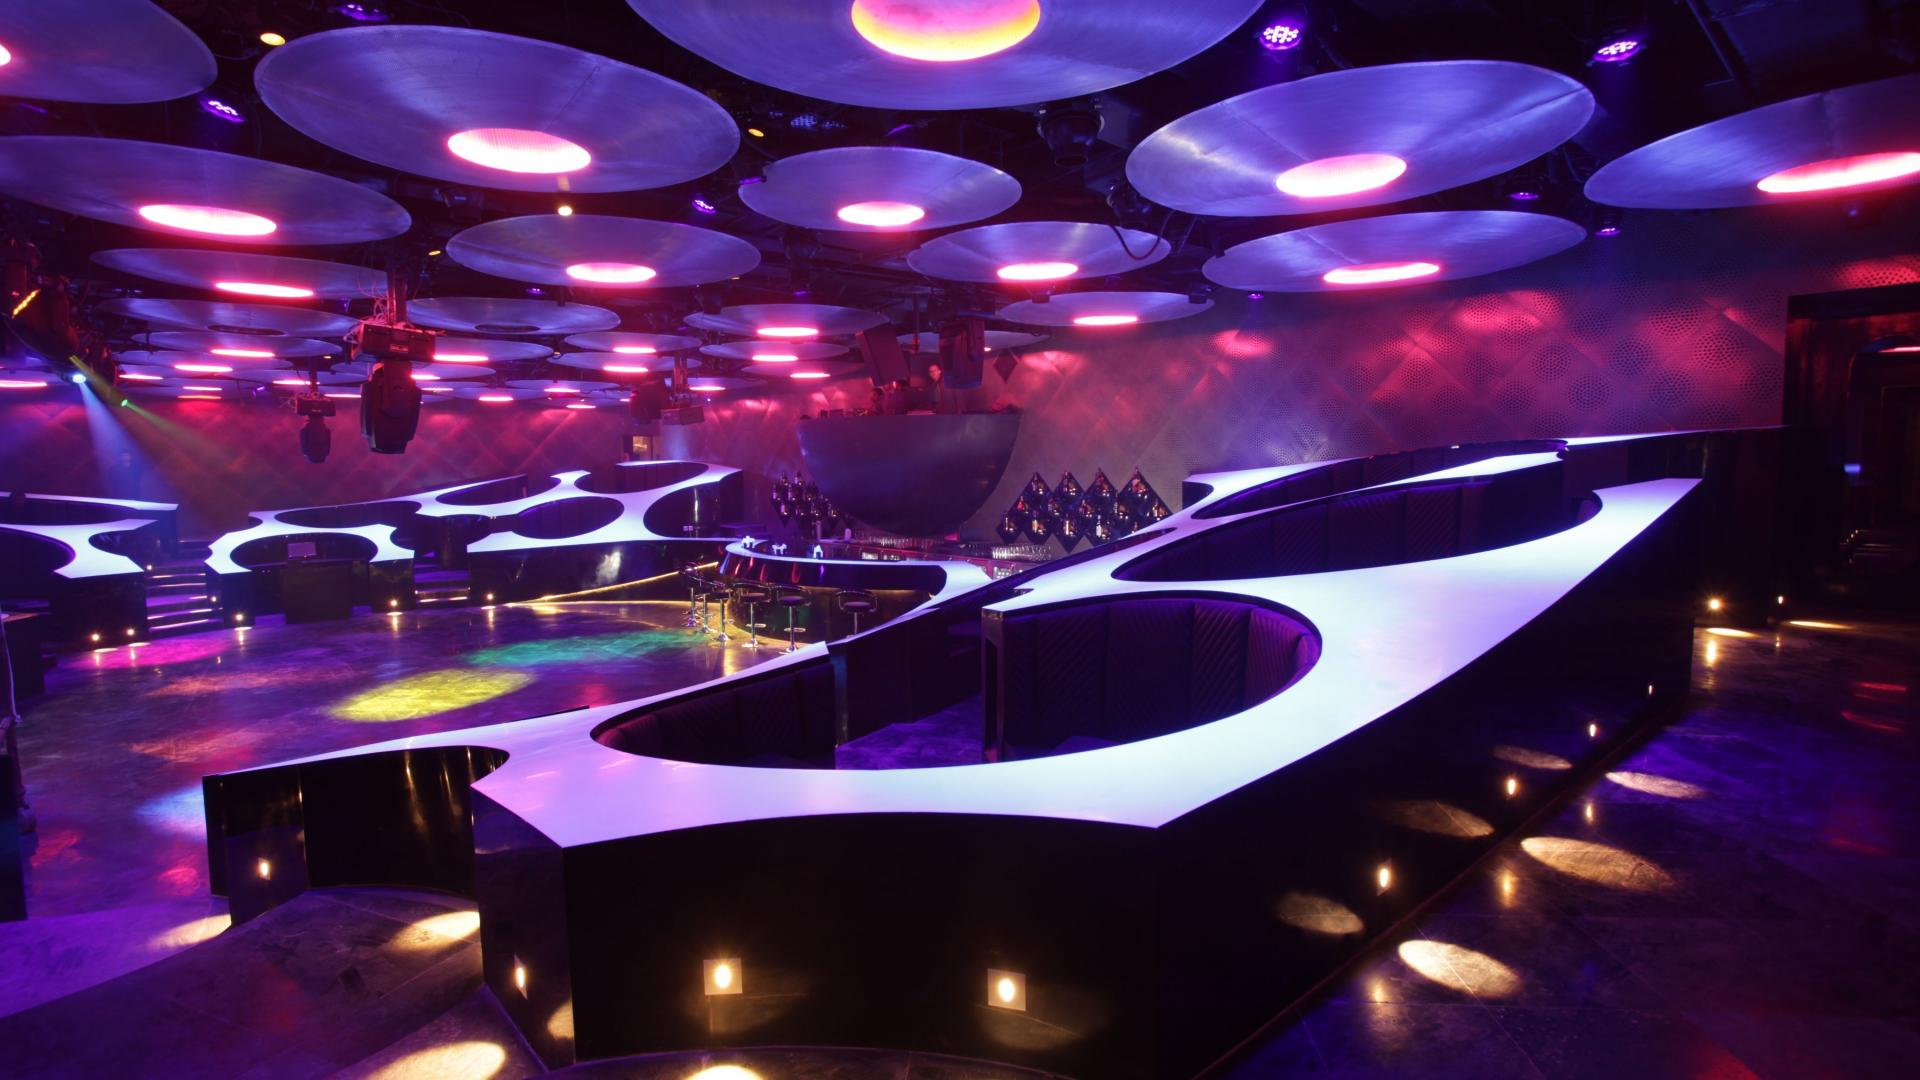 vip wallpaper hd,lighting,ceiling,light,purple,violet